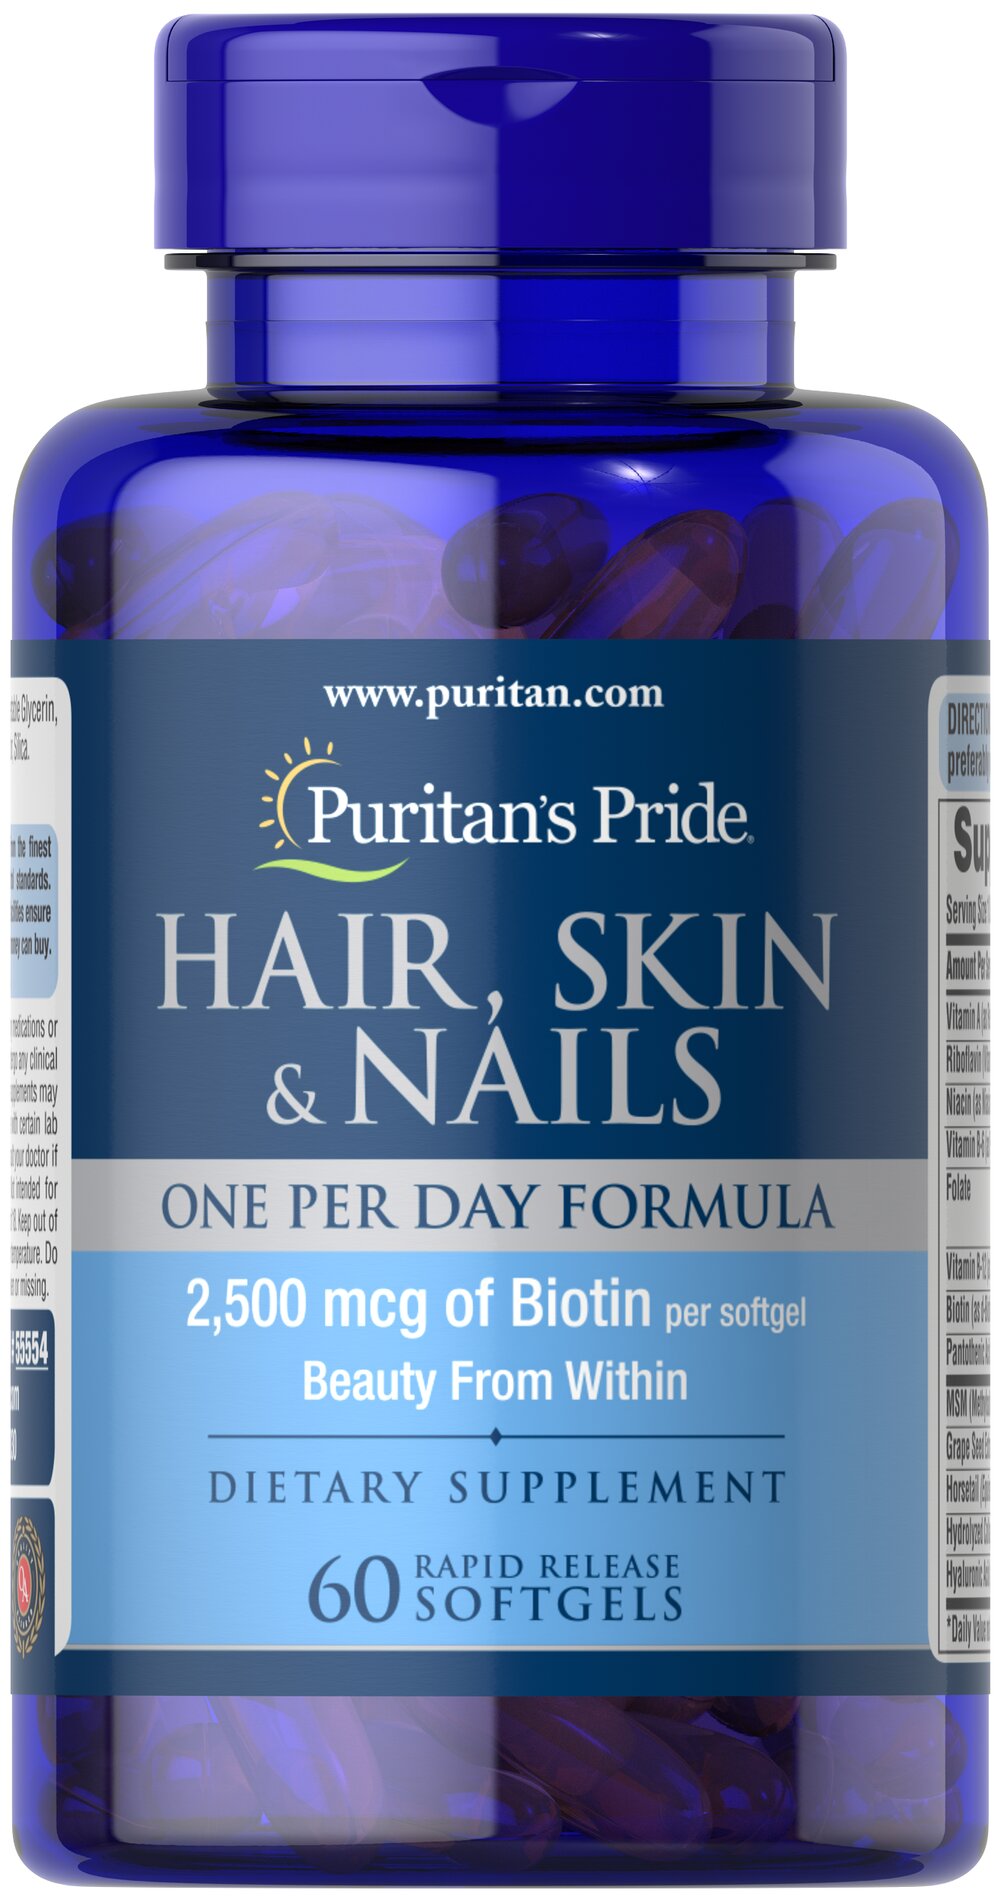 Puritan's Pride

Hair, Skin & Nails One Per Day Formula